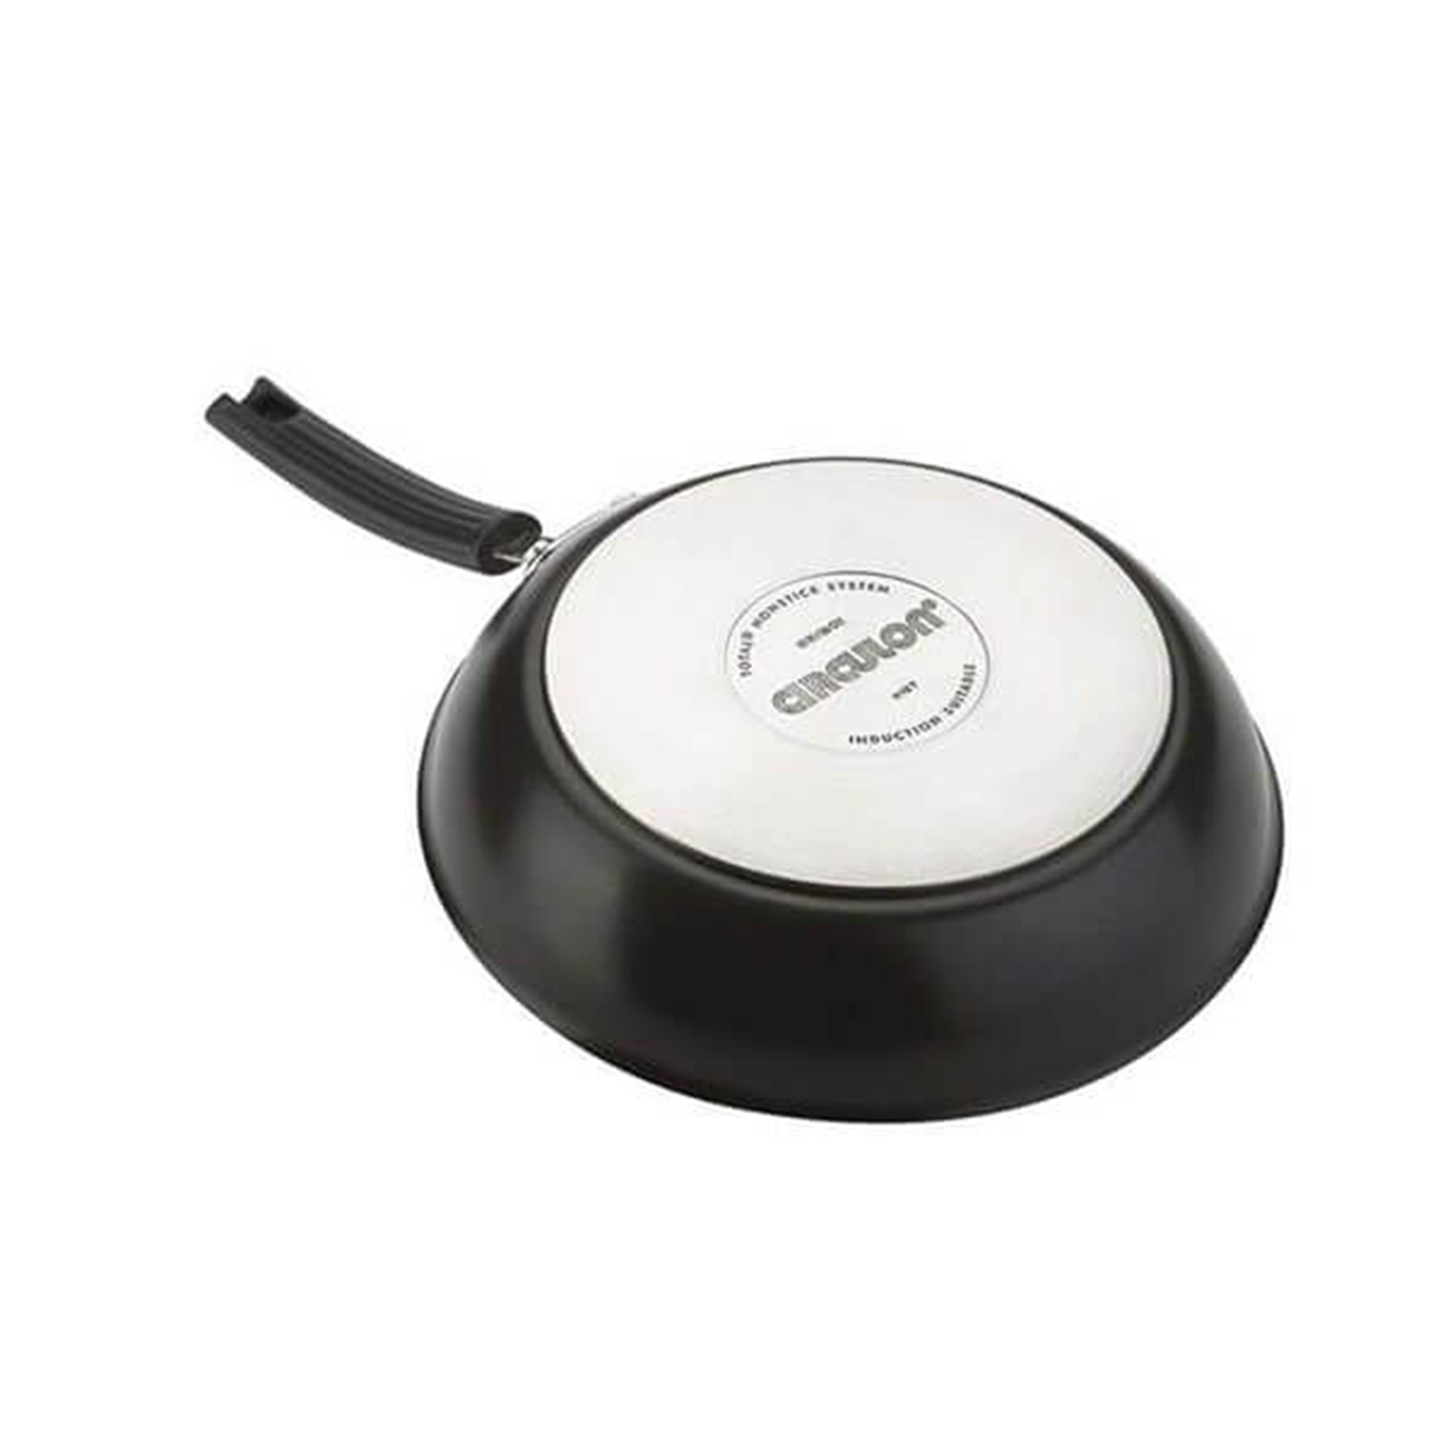 a black frying pan